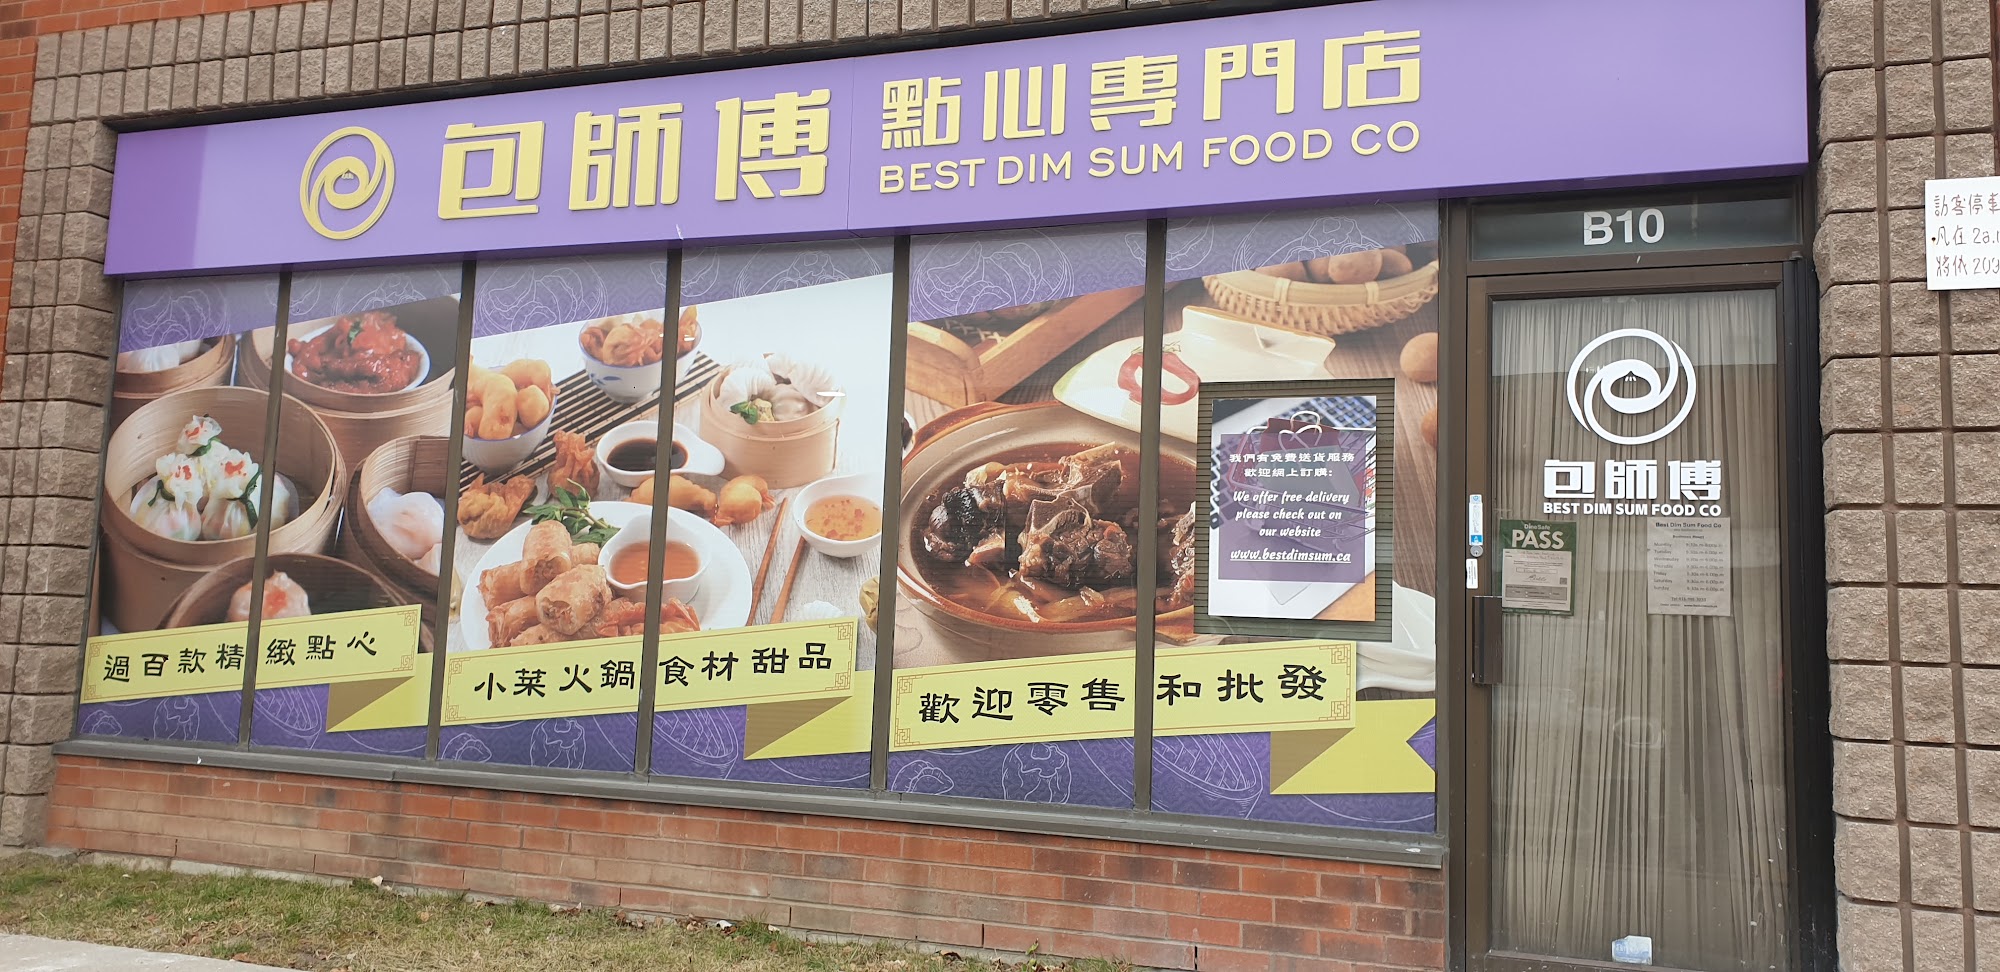 Best Dim Sum Food Co包師傅點心專門店 (包師傅點心專門店)